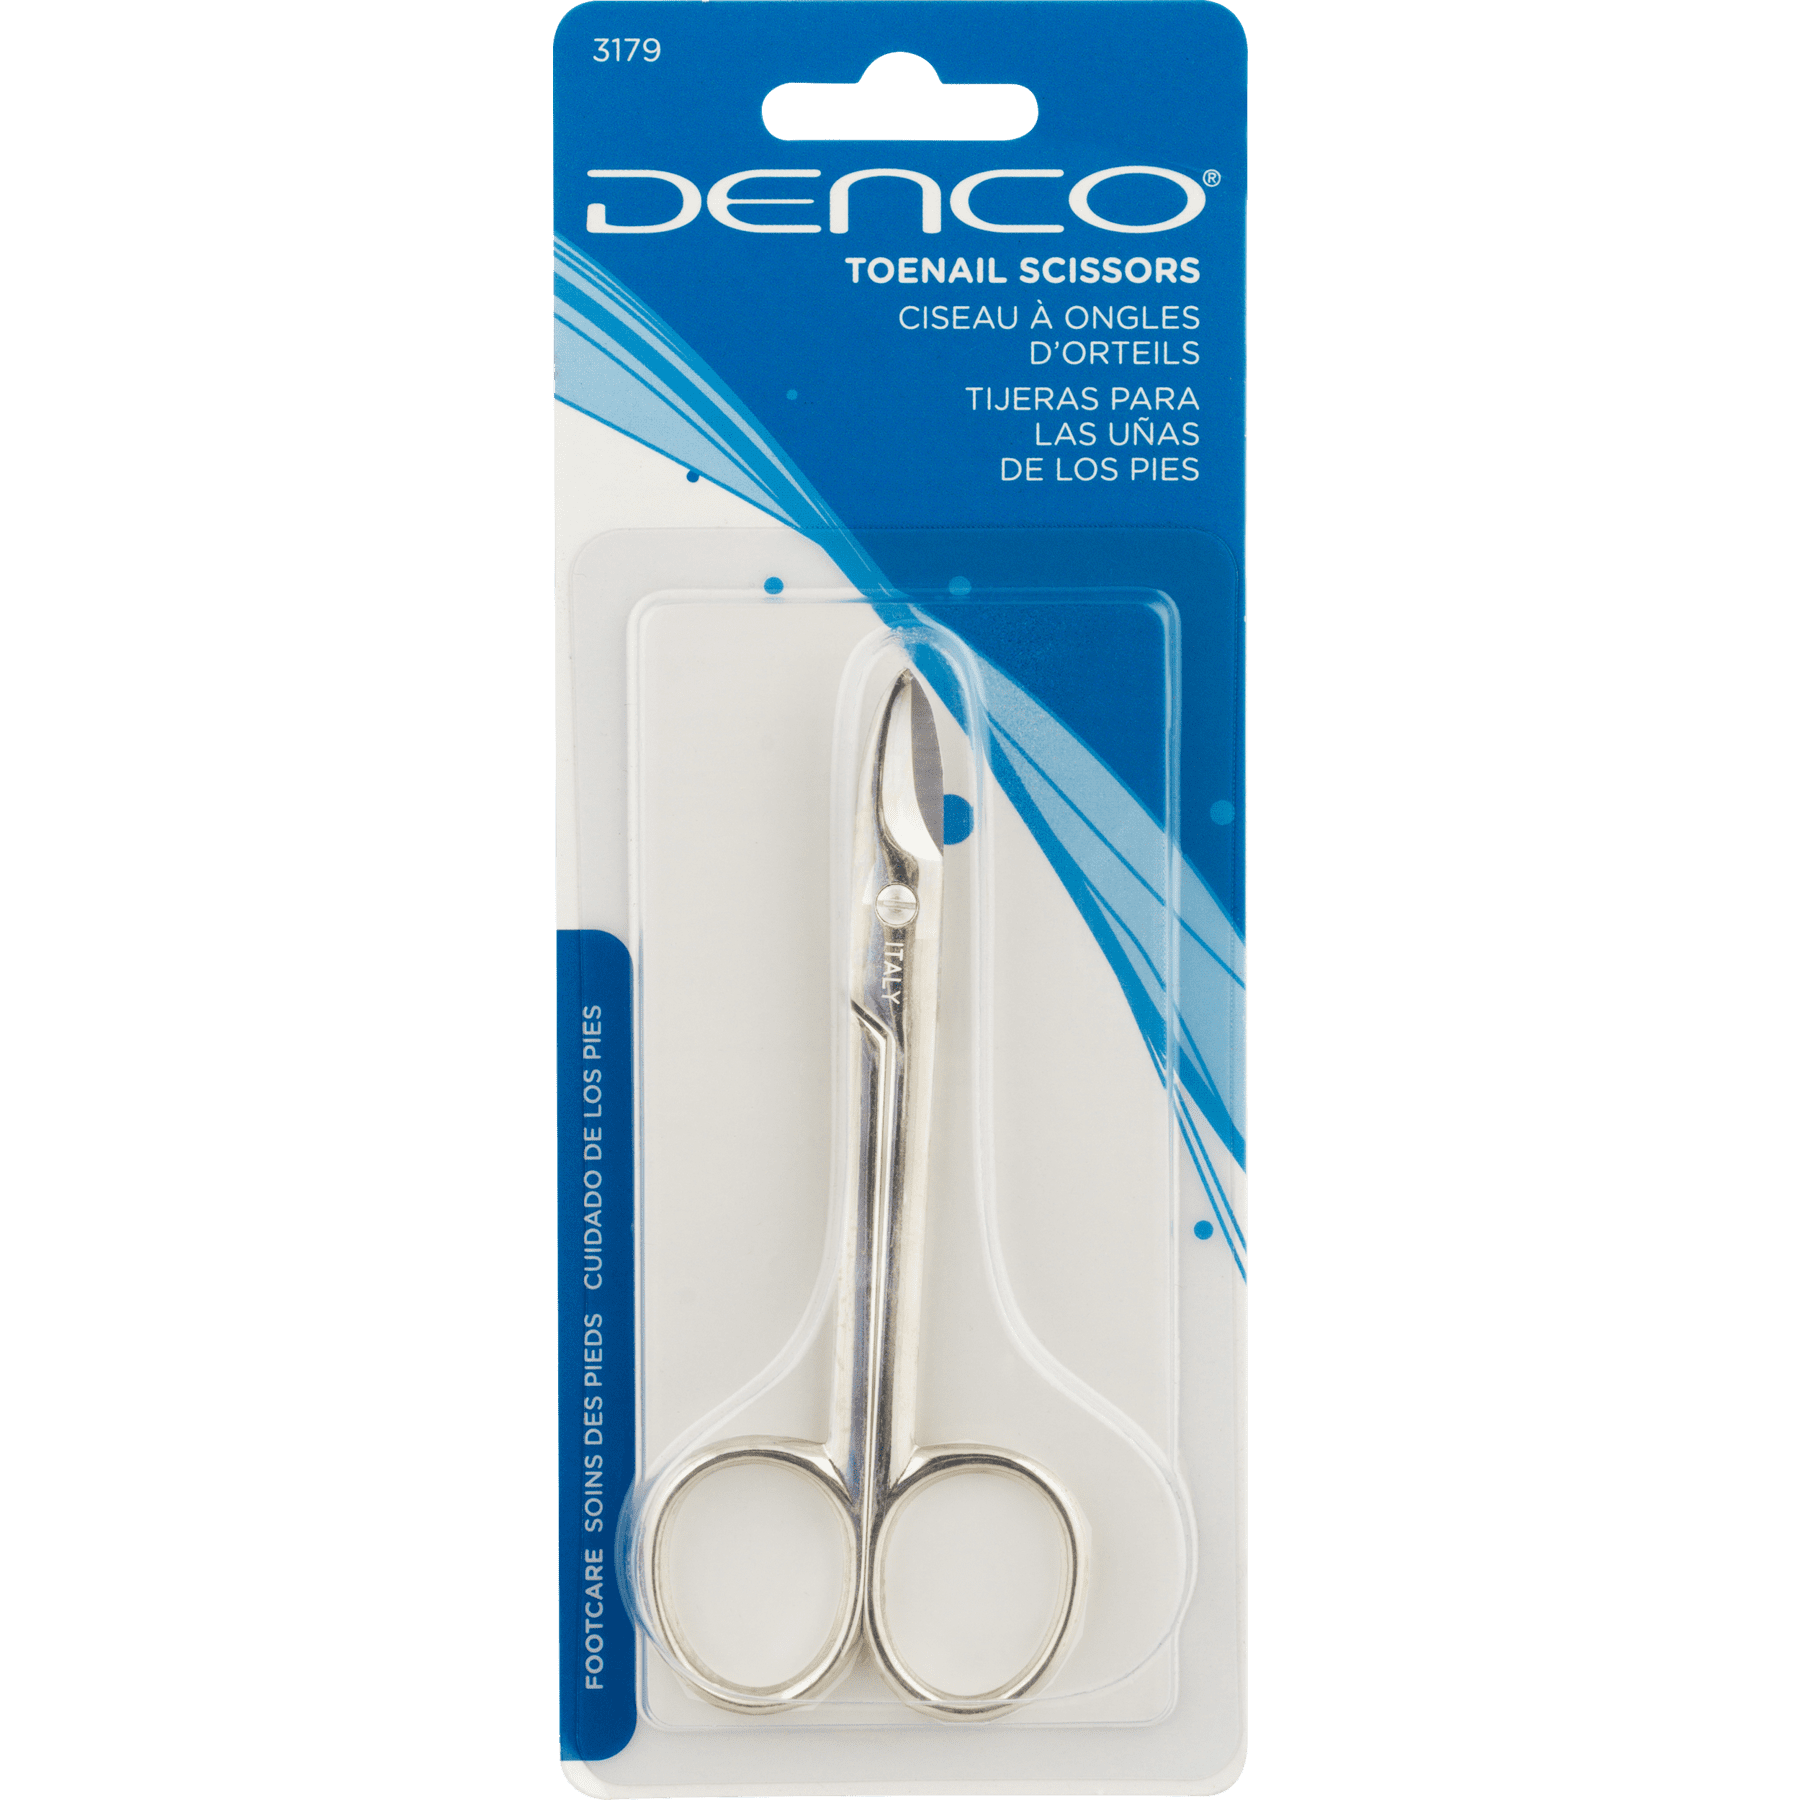 denco nail clippers